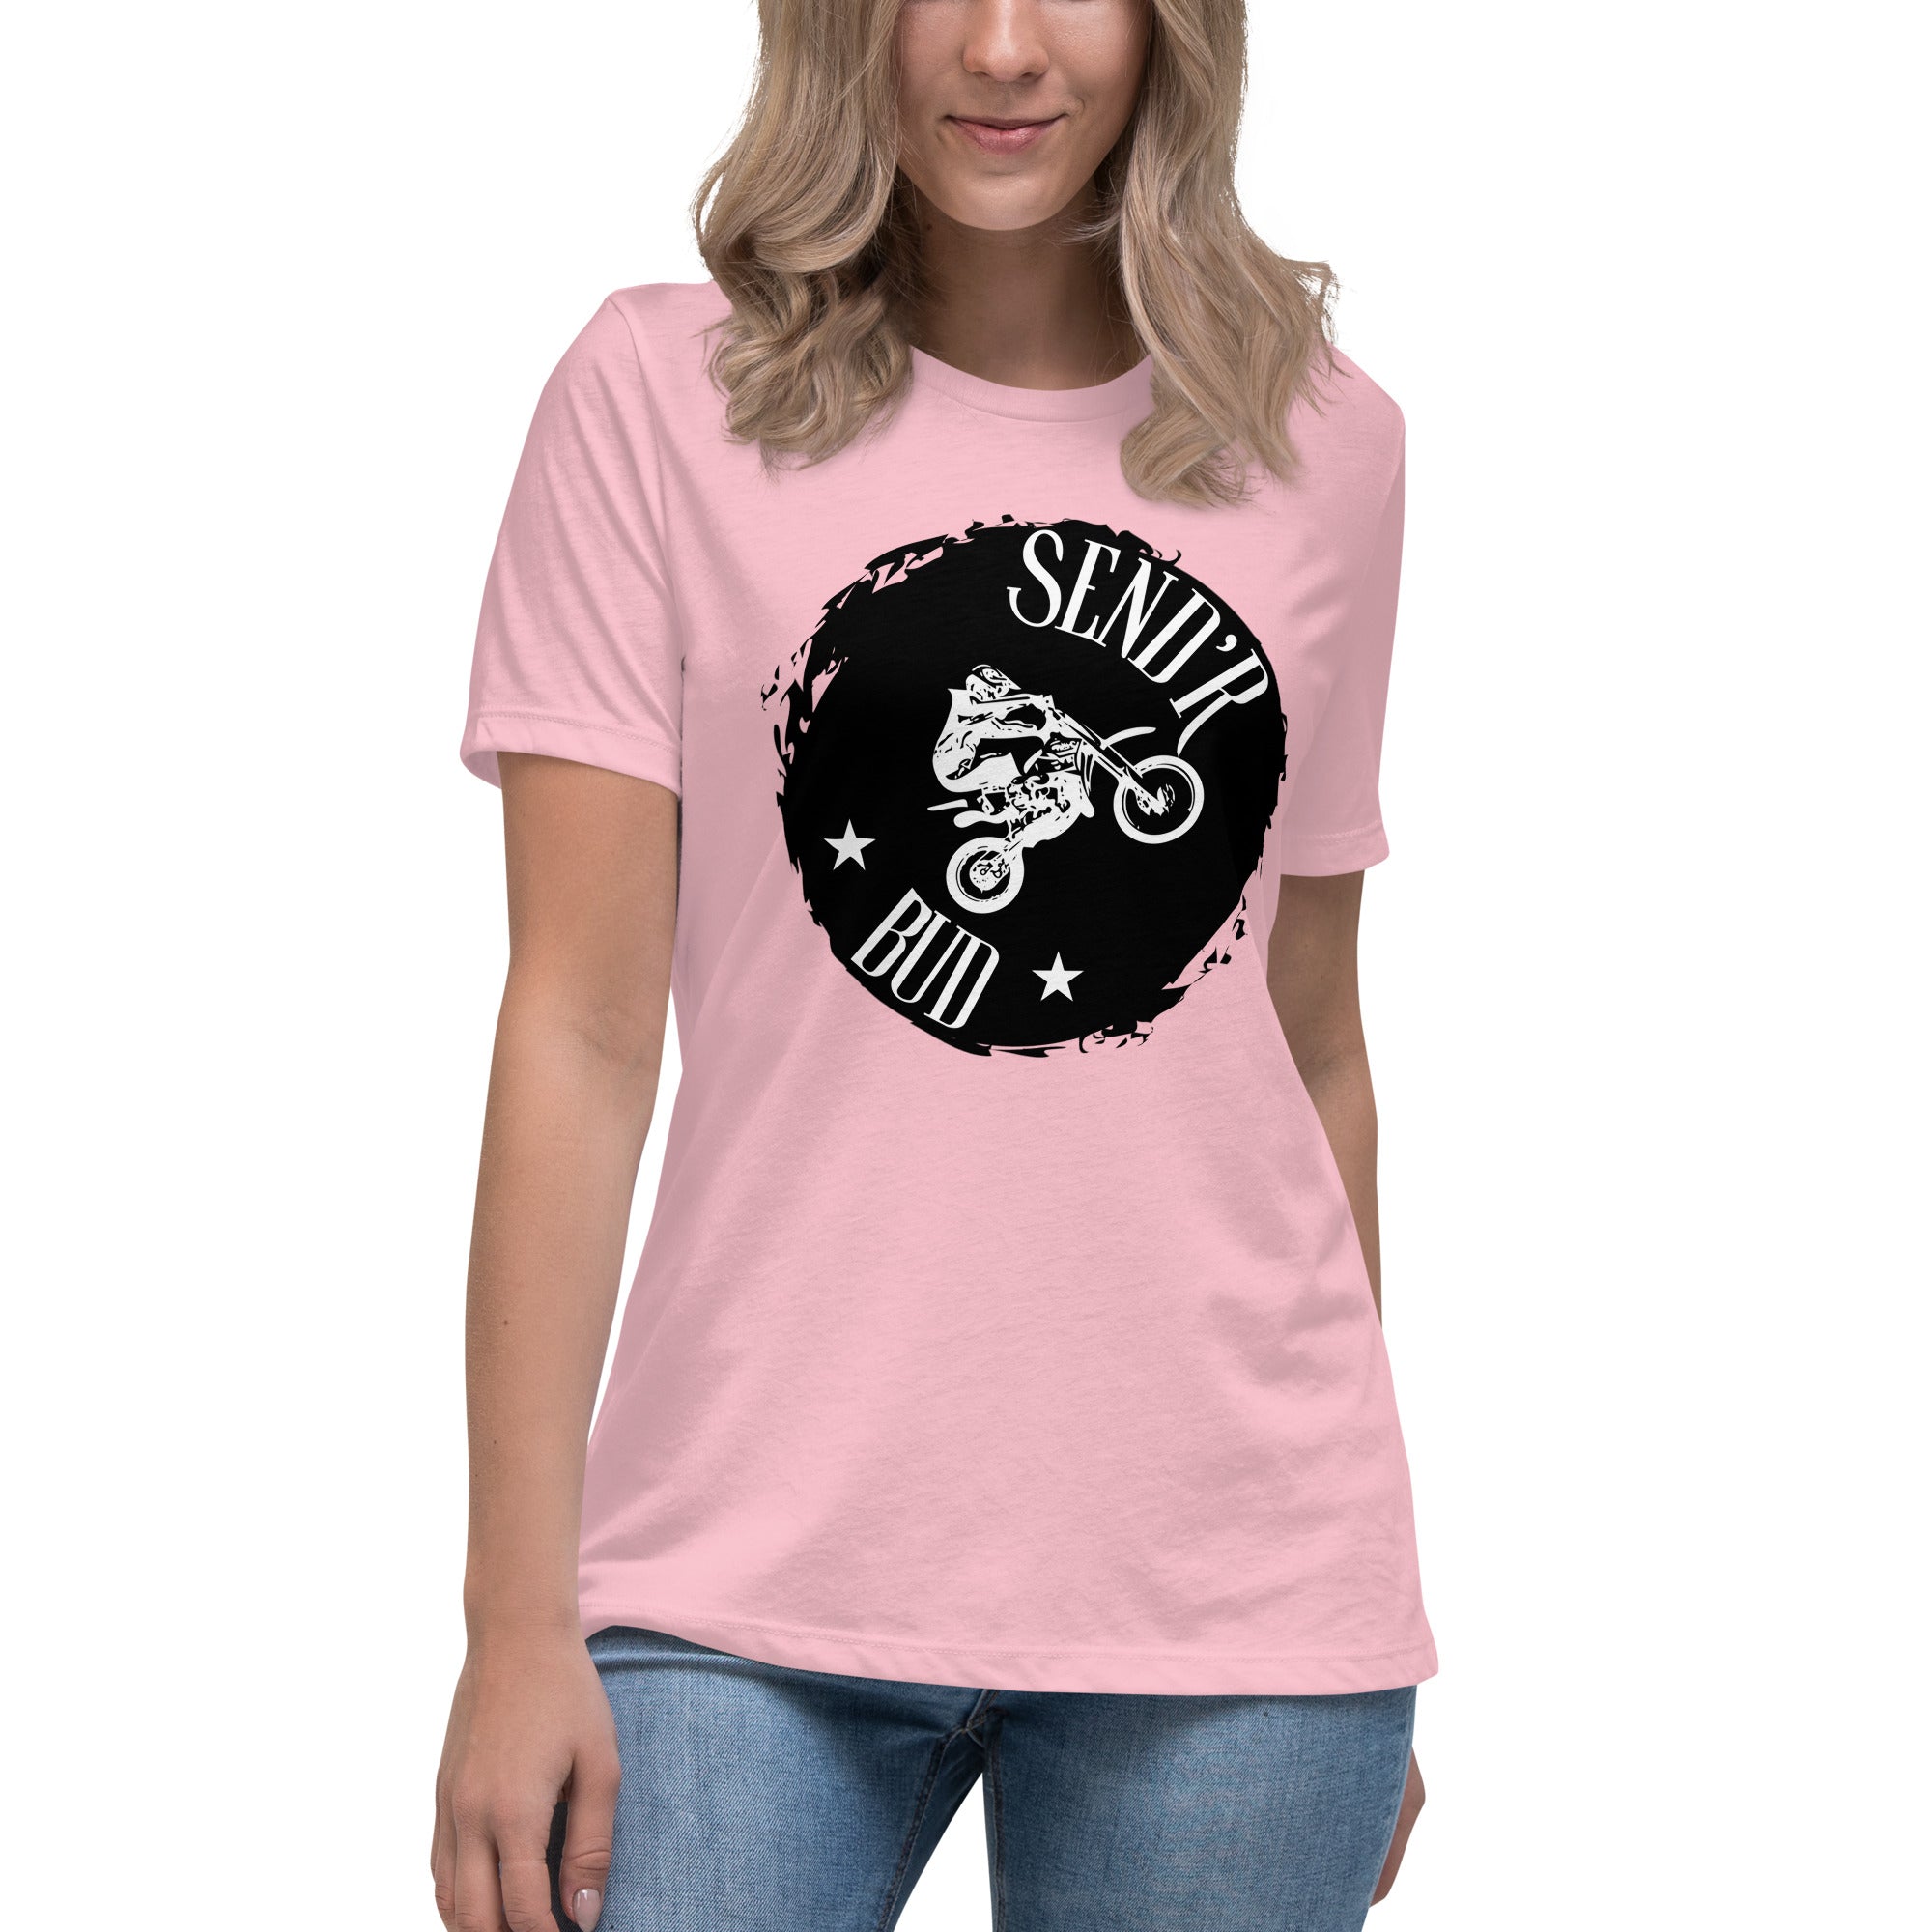 Send'r Bud Women's Premium T-Shirt